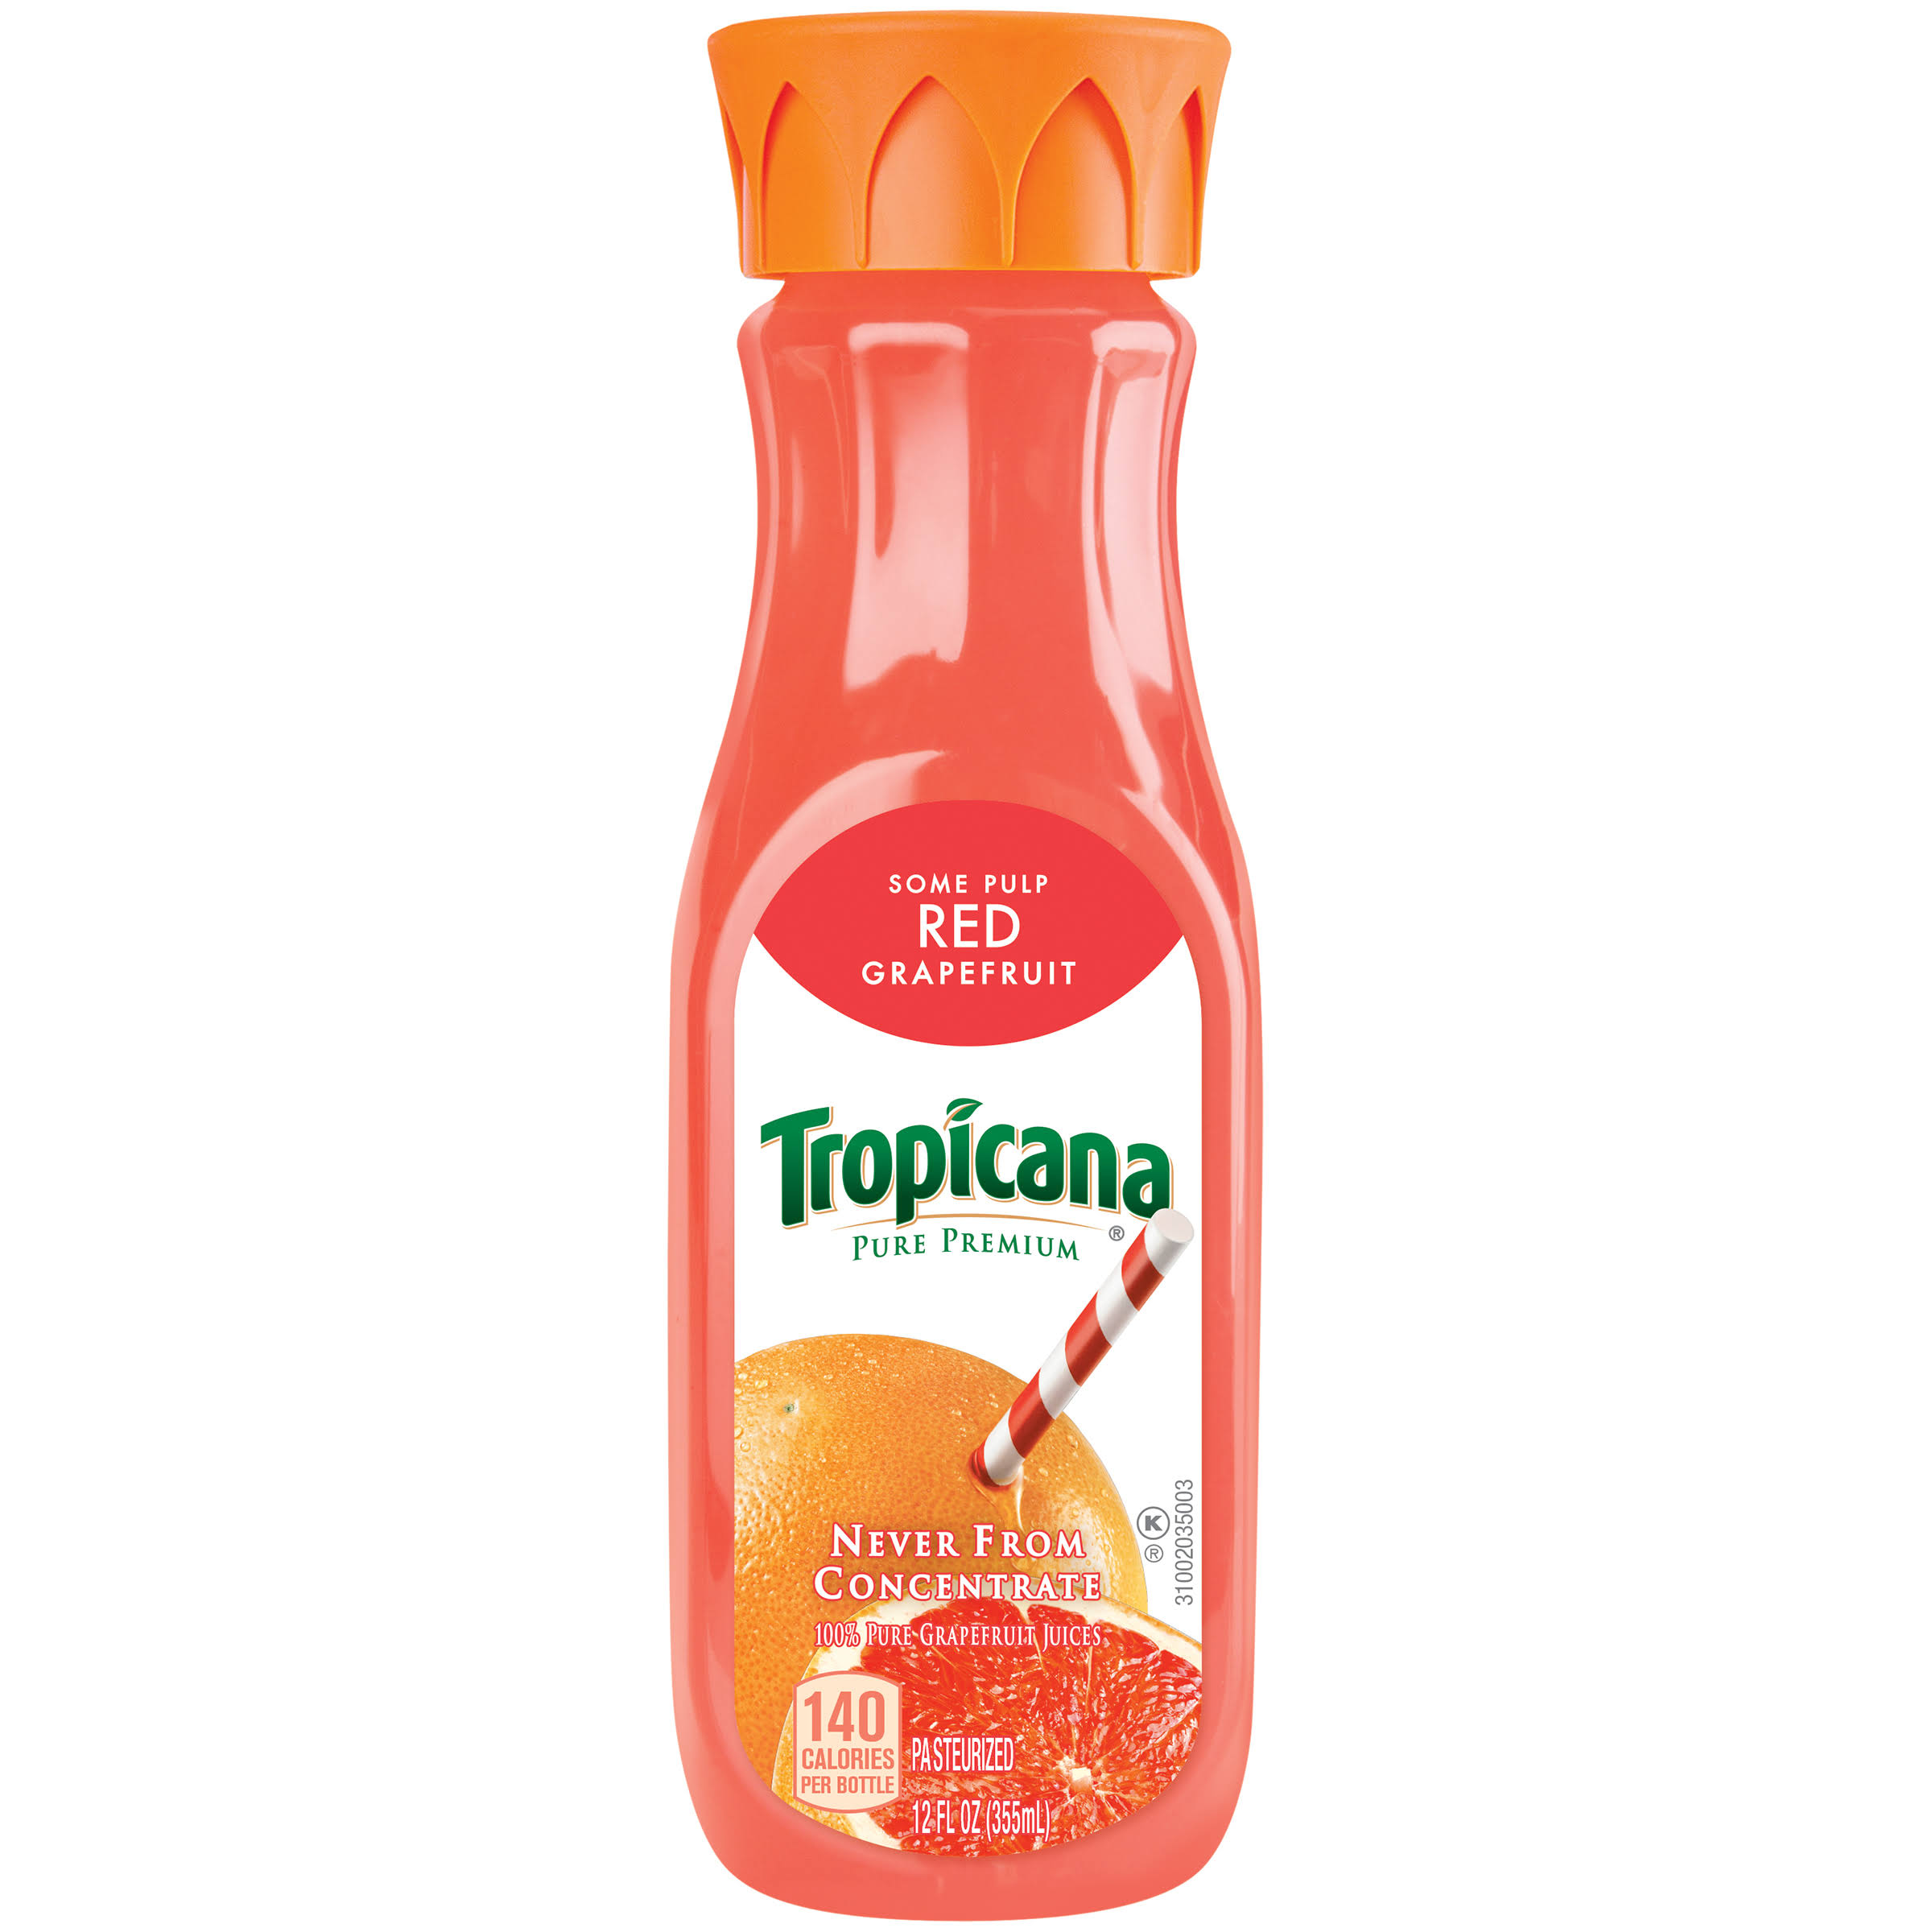 Tropicana Ruby Red 100% Grapefruit Juice - 12 fl oz bottle